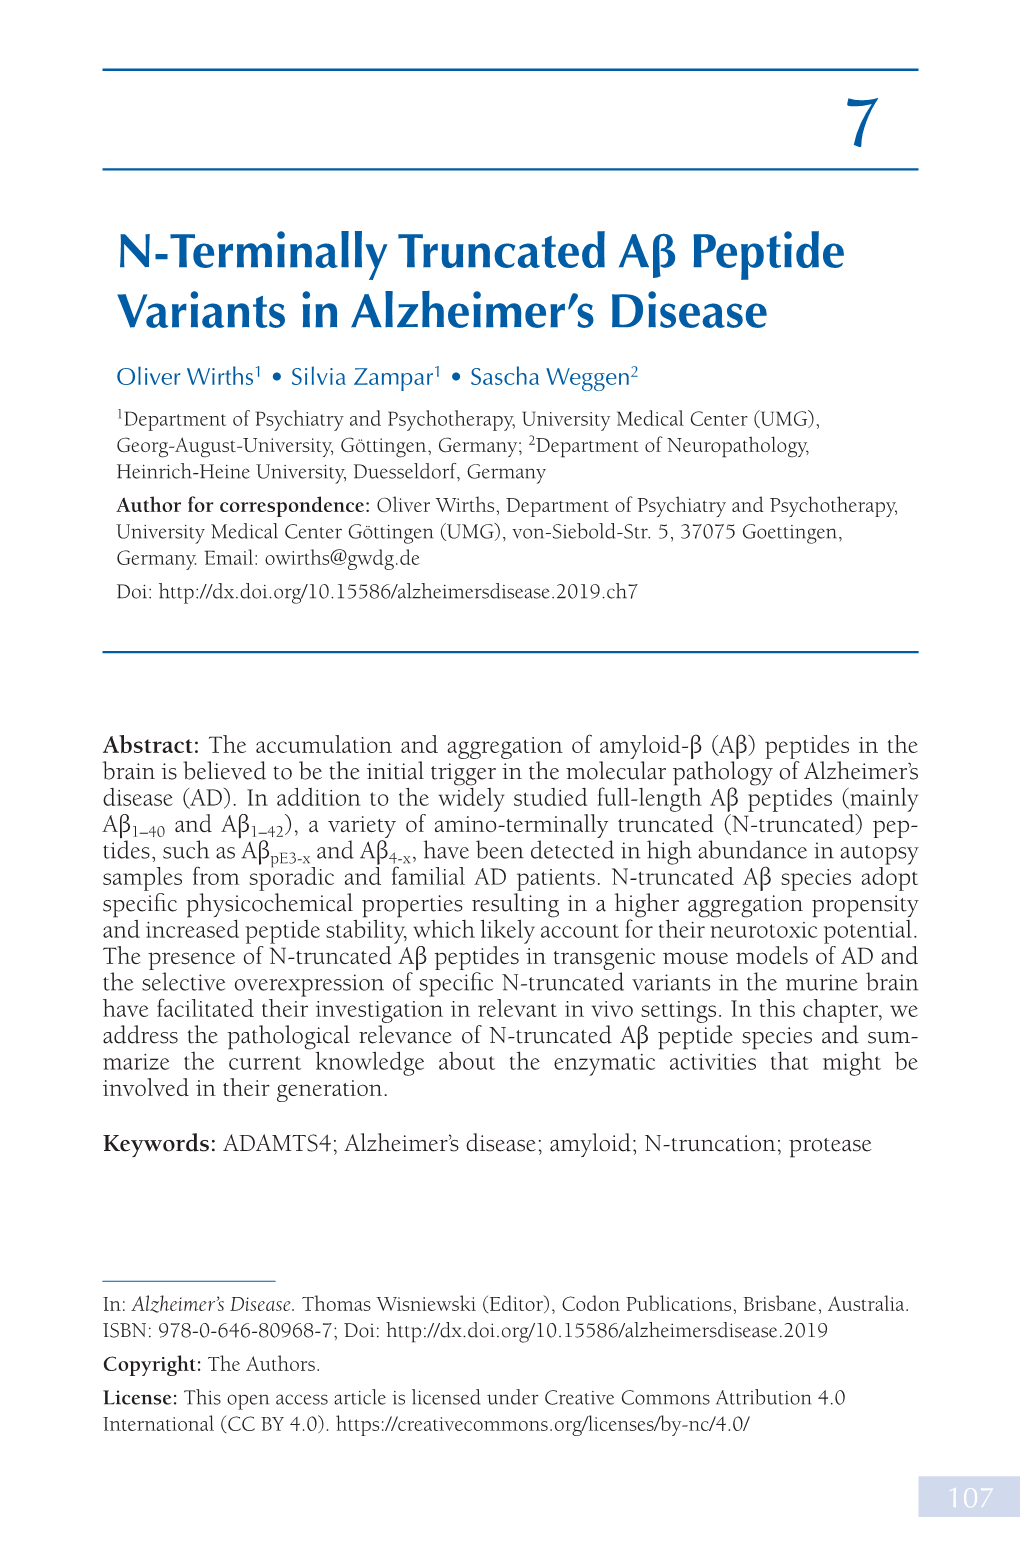 N-Terminally Truncated Aβ Peptide Variants in Alzheimer's Disease